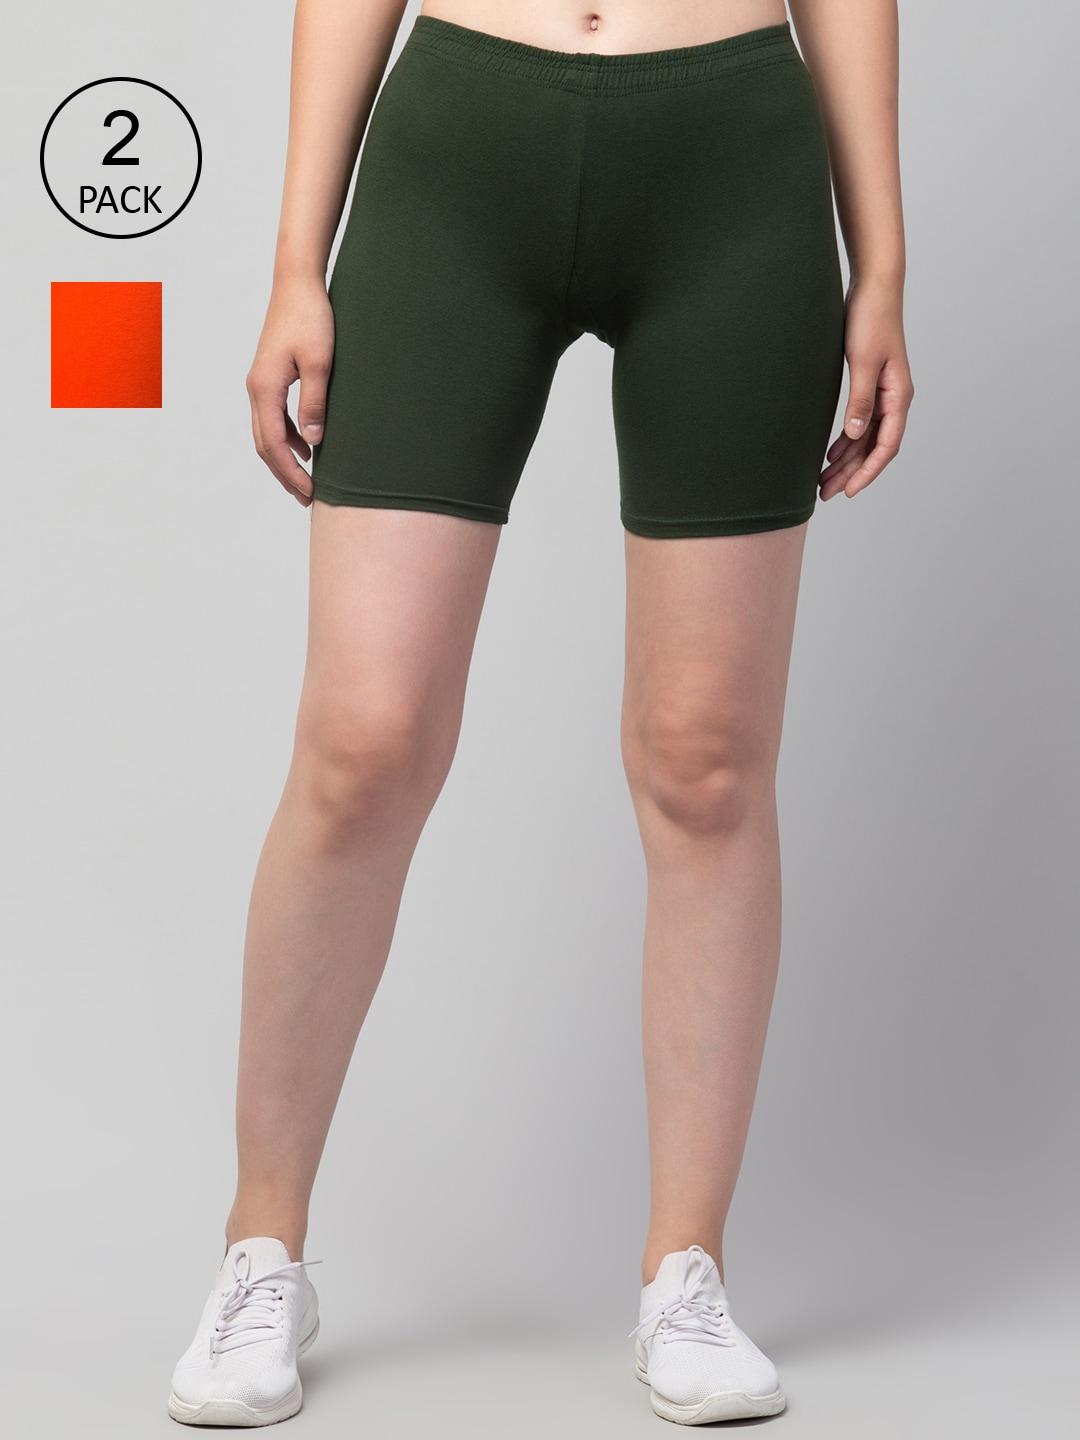 apraa & parma women orange slim fit cycling sports shorts